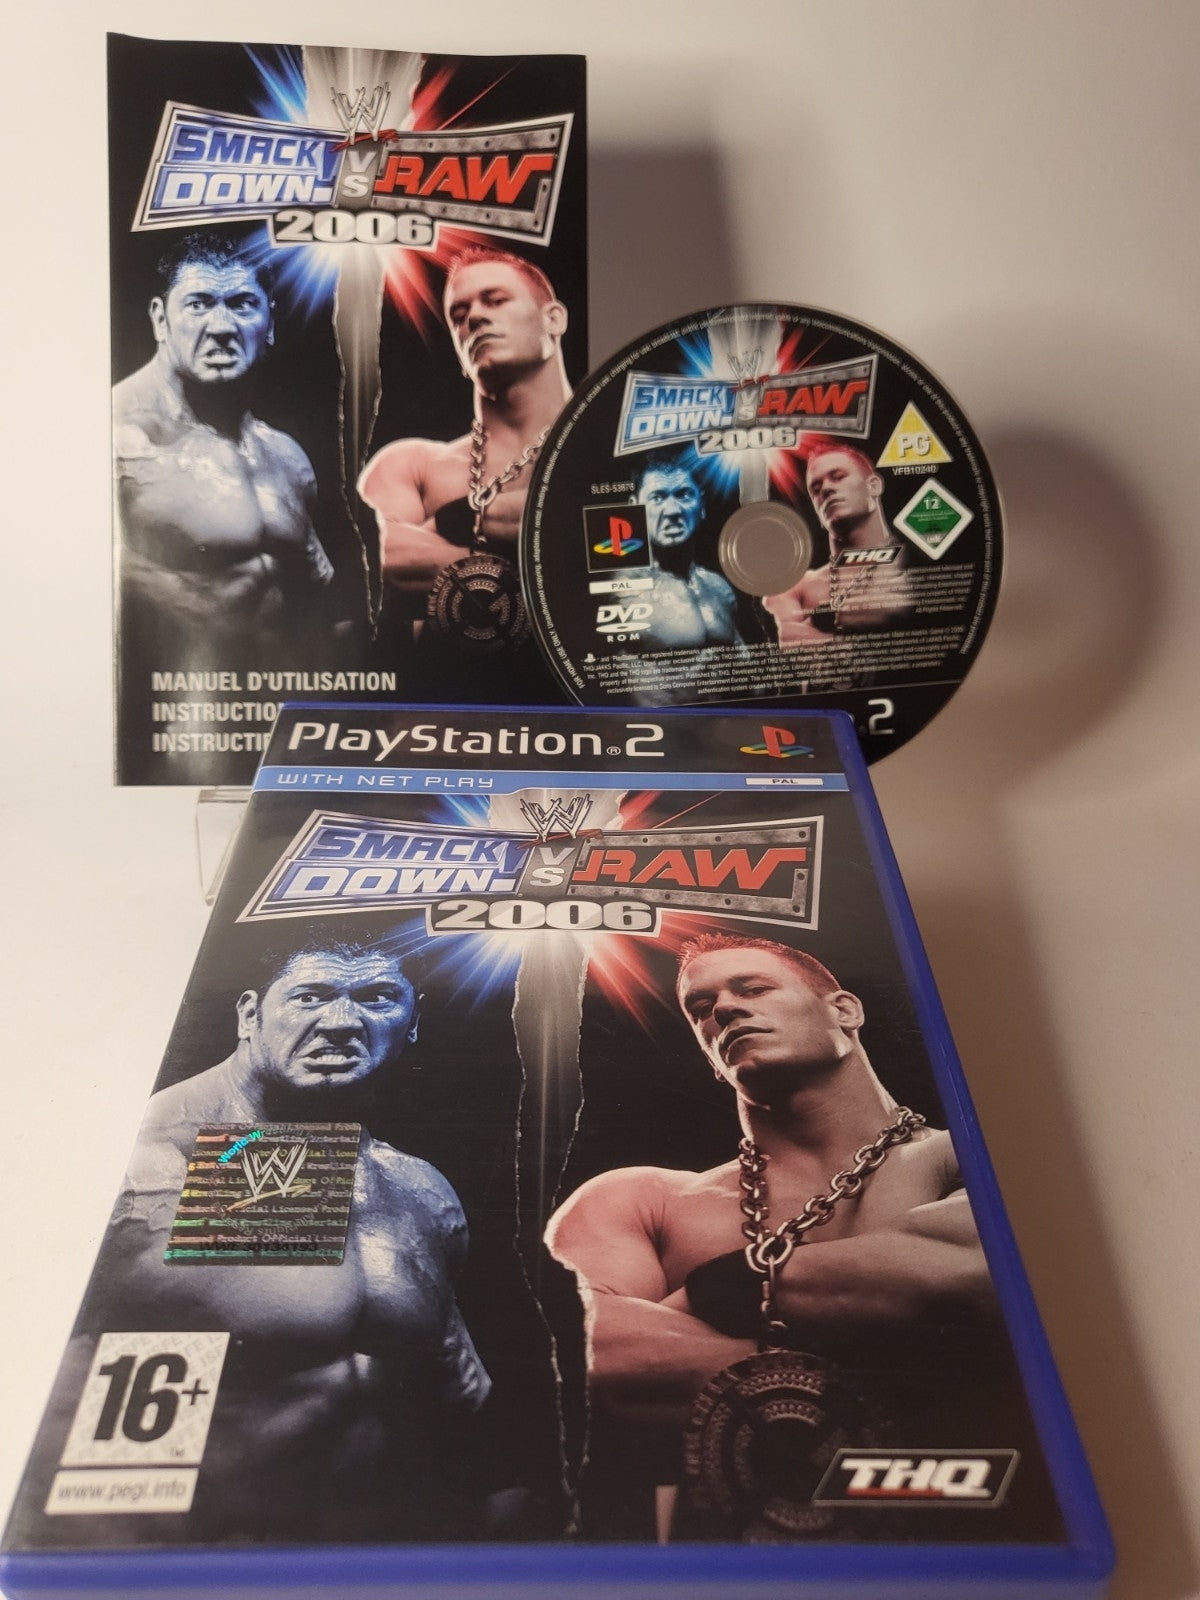 Smackdown vs Raw 2006 Playstation 2